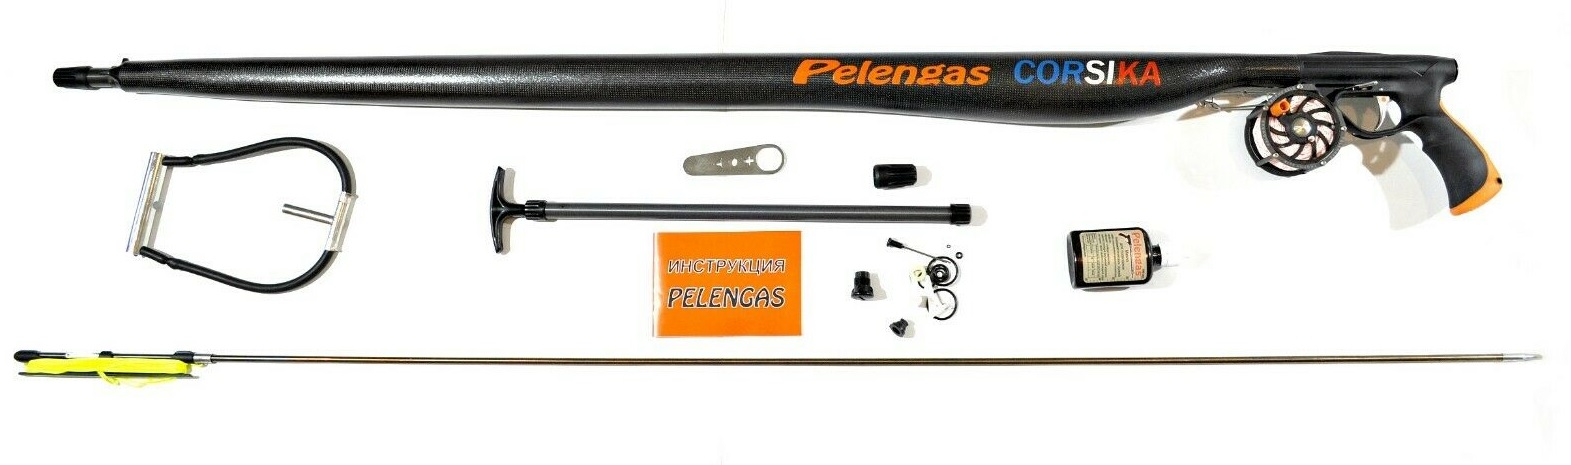 Pelengas Carbon 140 cm.jpg